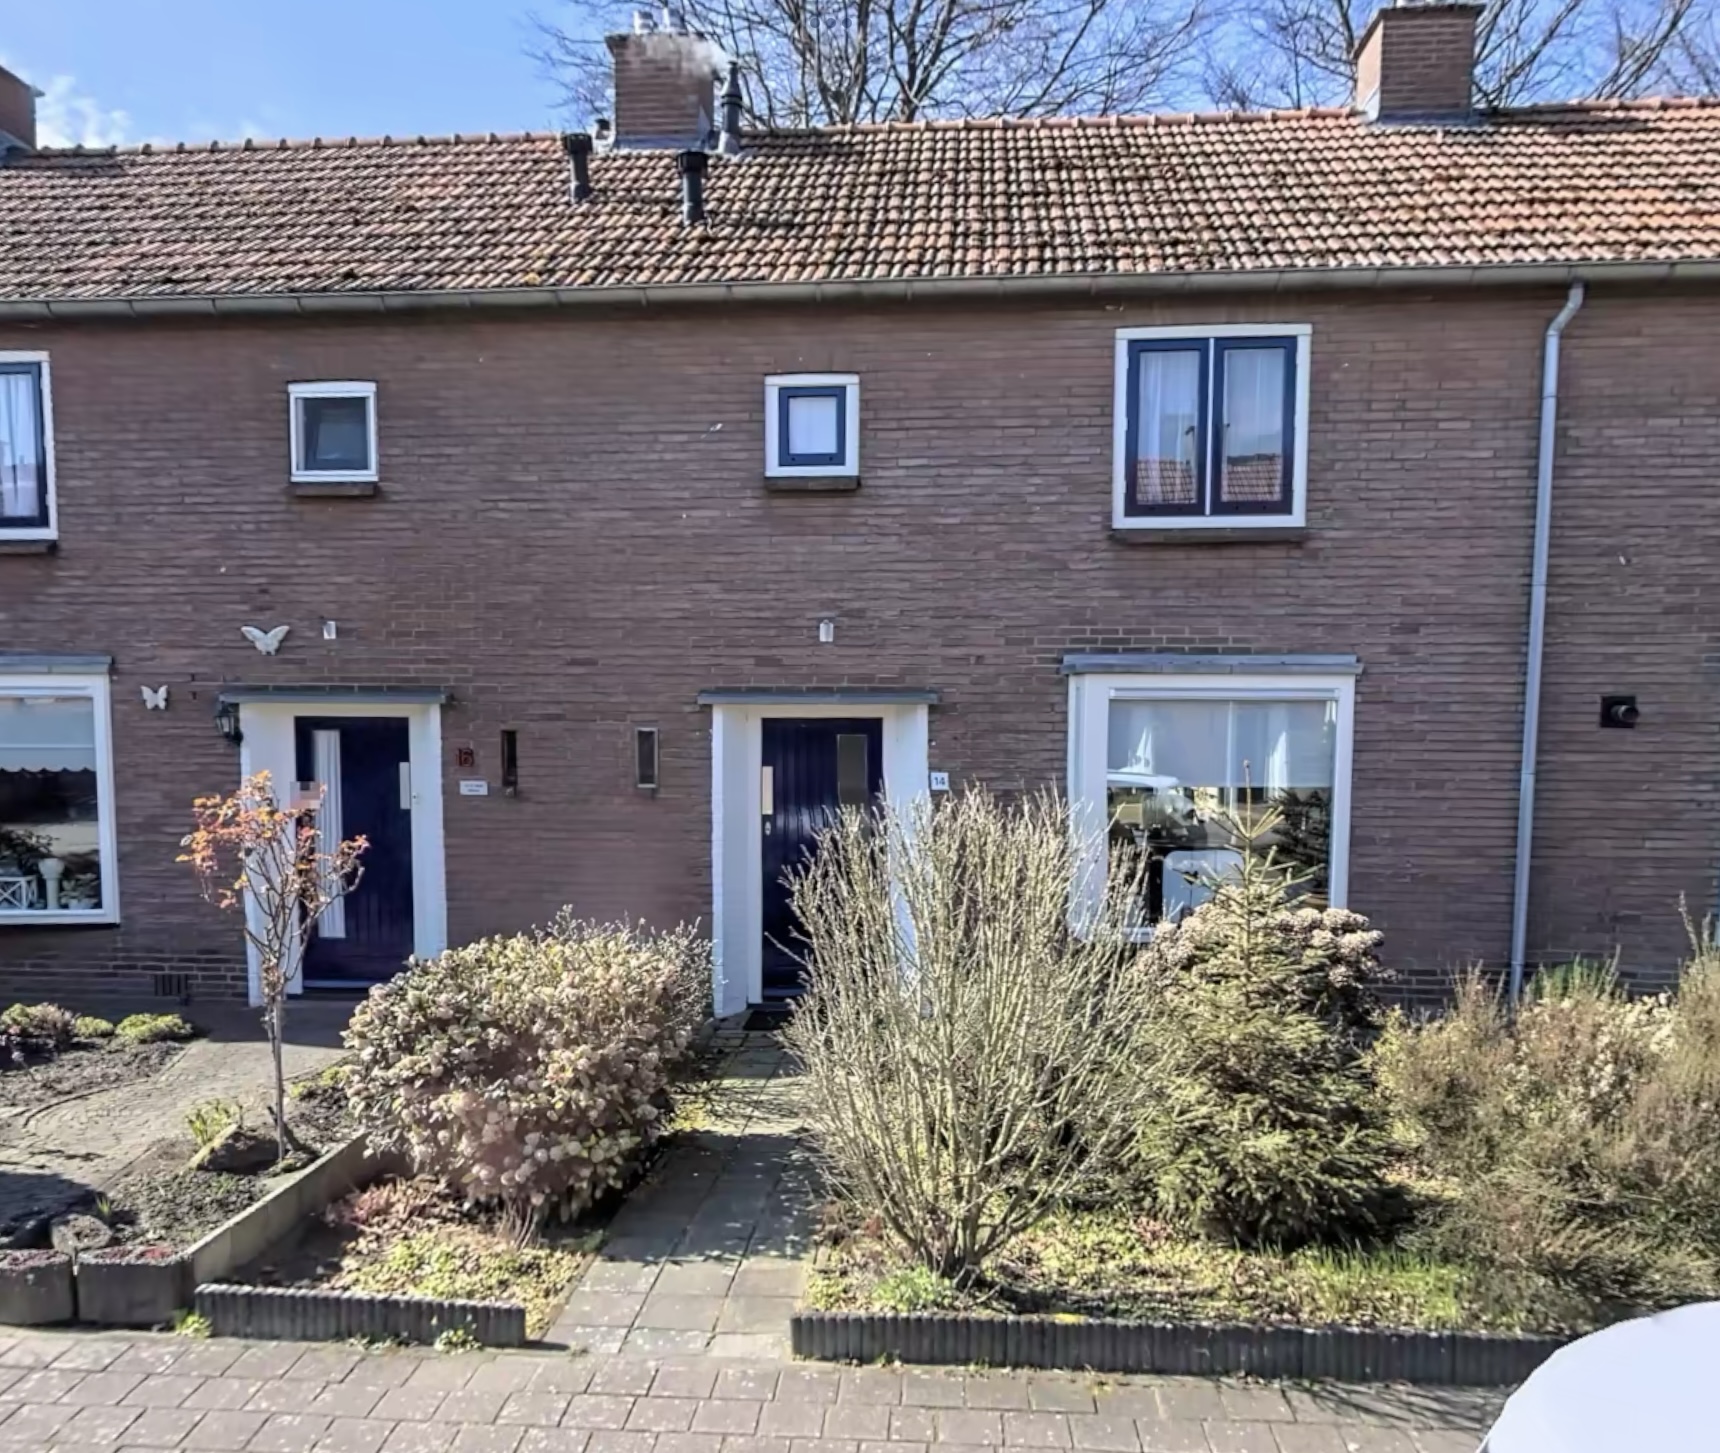 Prunusstraat 14, 7255 XH Hengelo, Nederland